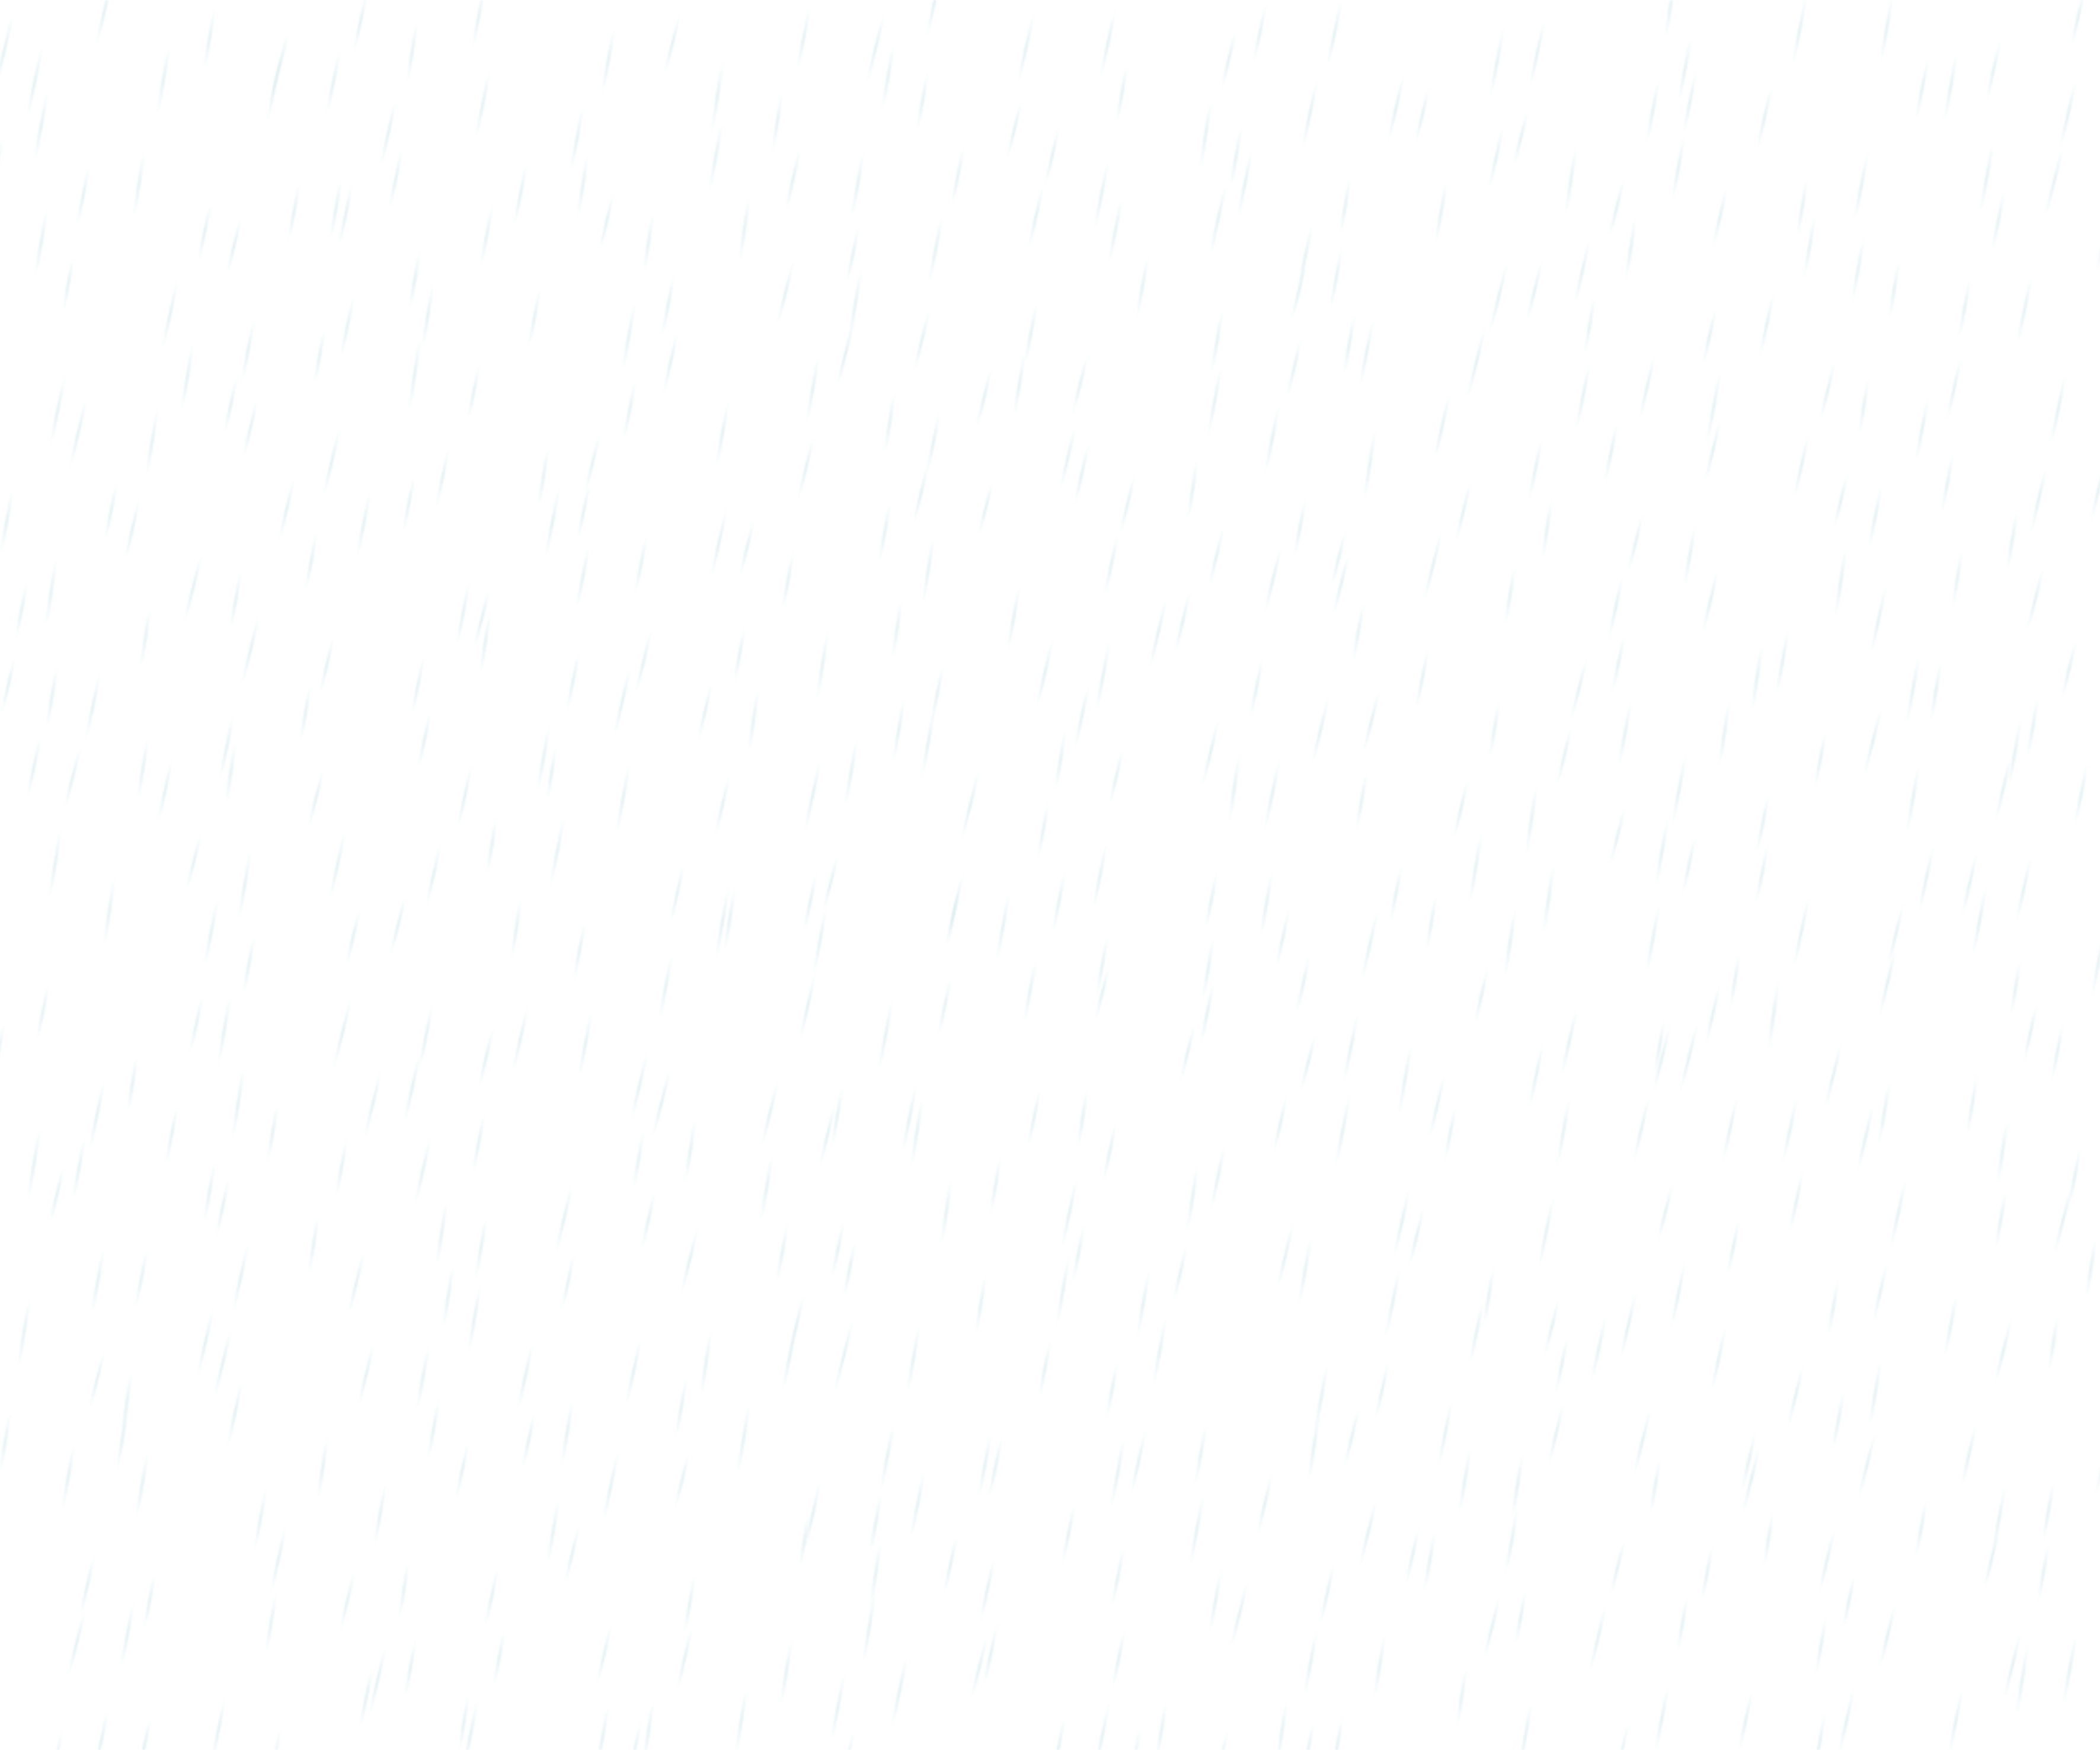 Rain PNG images free download, rain drops PNG.